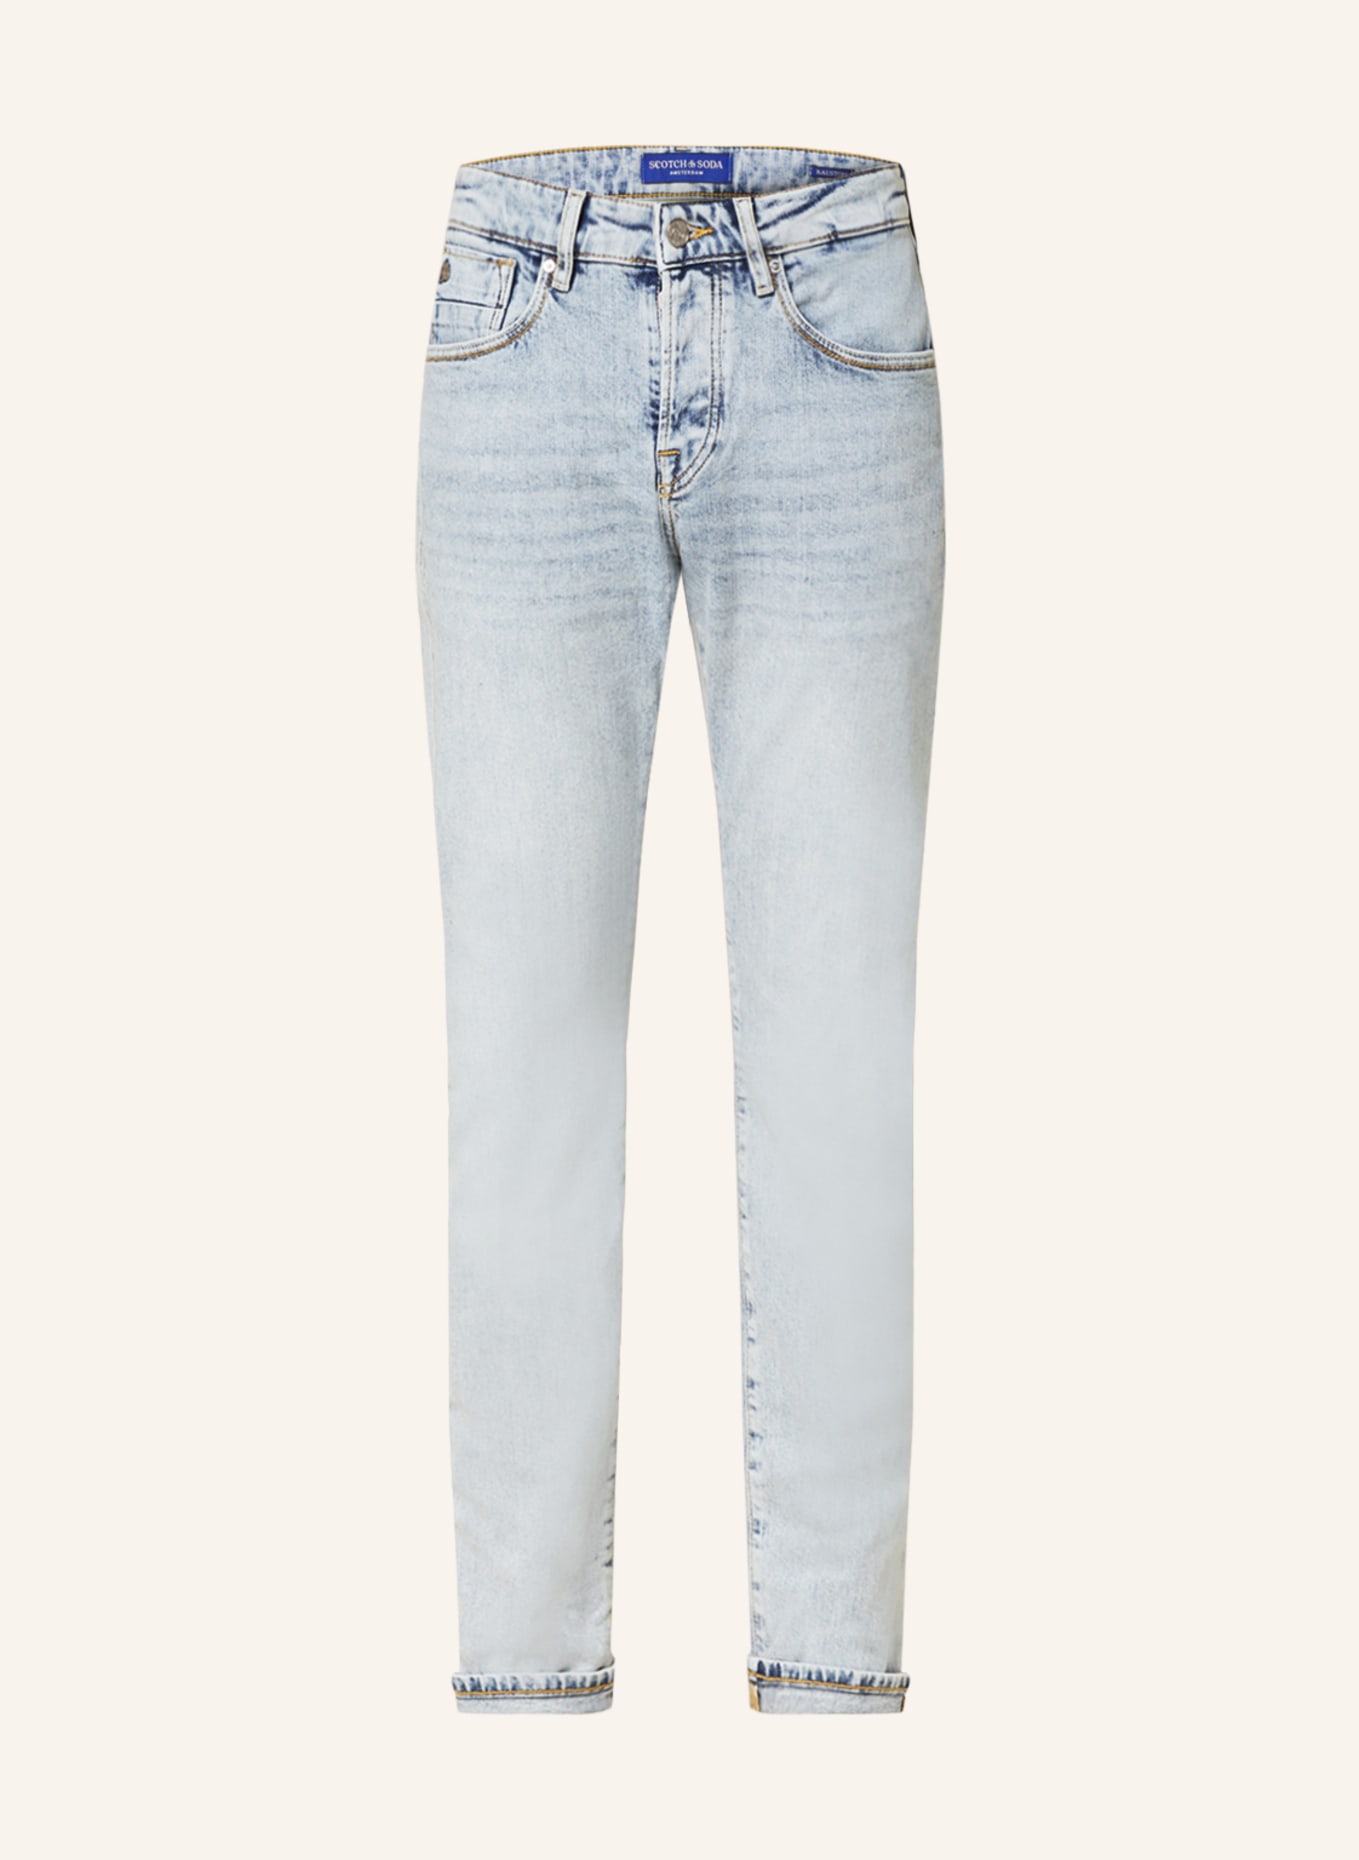 SCOTCH & SODA Jeans RALSTON Regular Slim Fit, Farbe: 5829 Take Down (Bild 1)